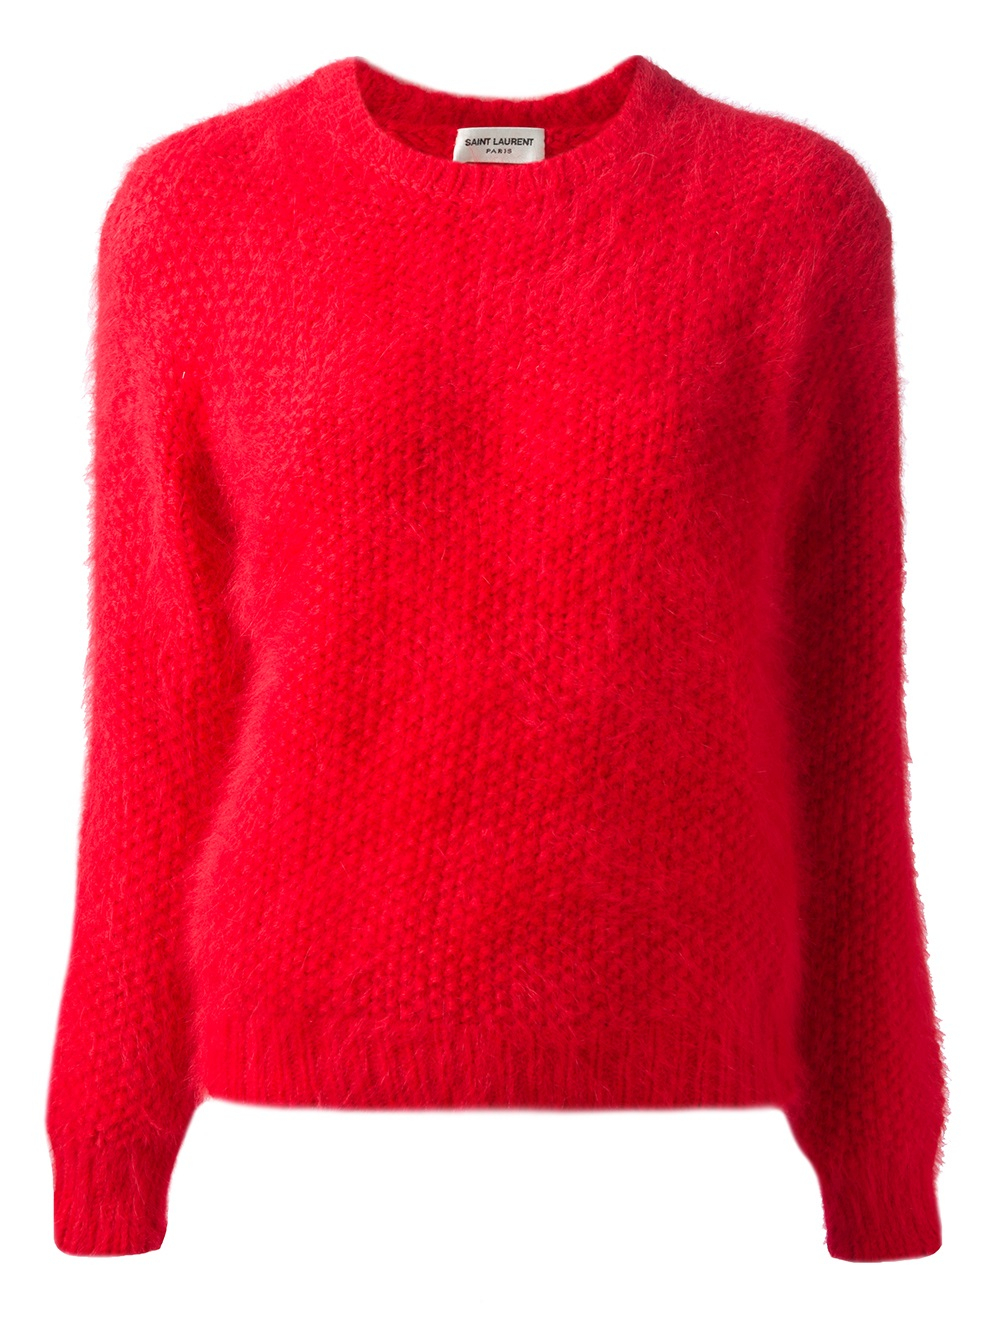 Lyst - Saint Laurent Angora Sweater in Red